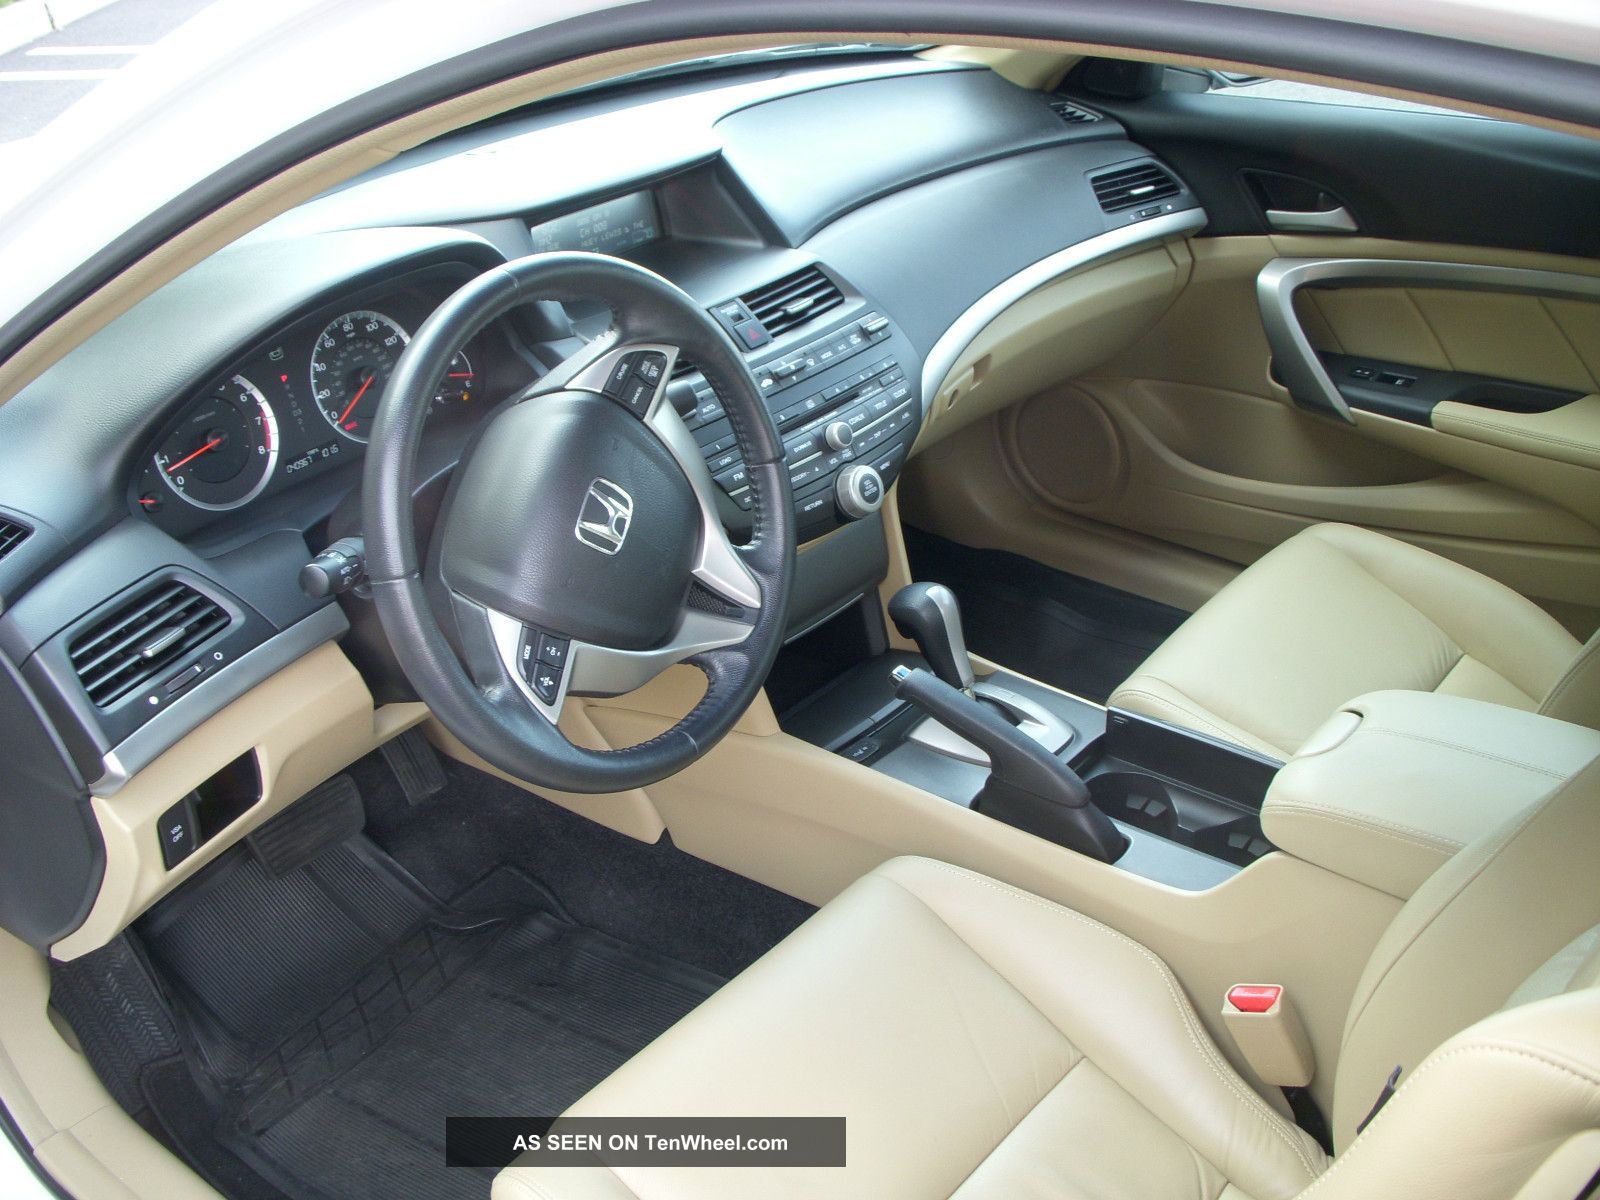 Adripelayo354 Honda Accord Coupe White Interior Images